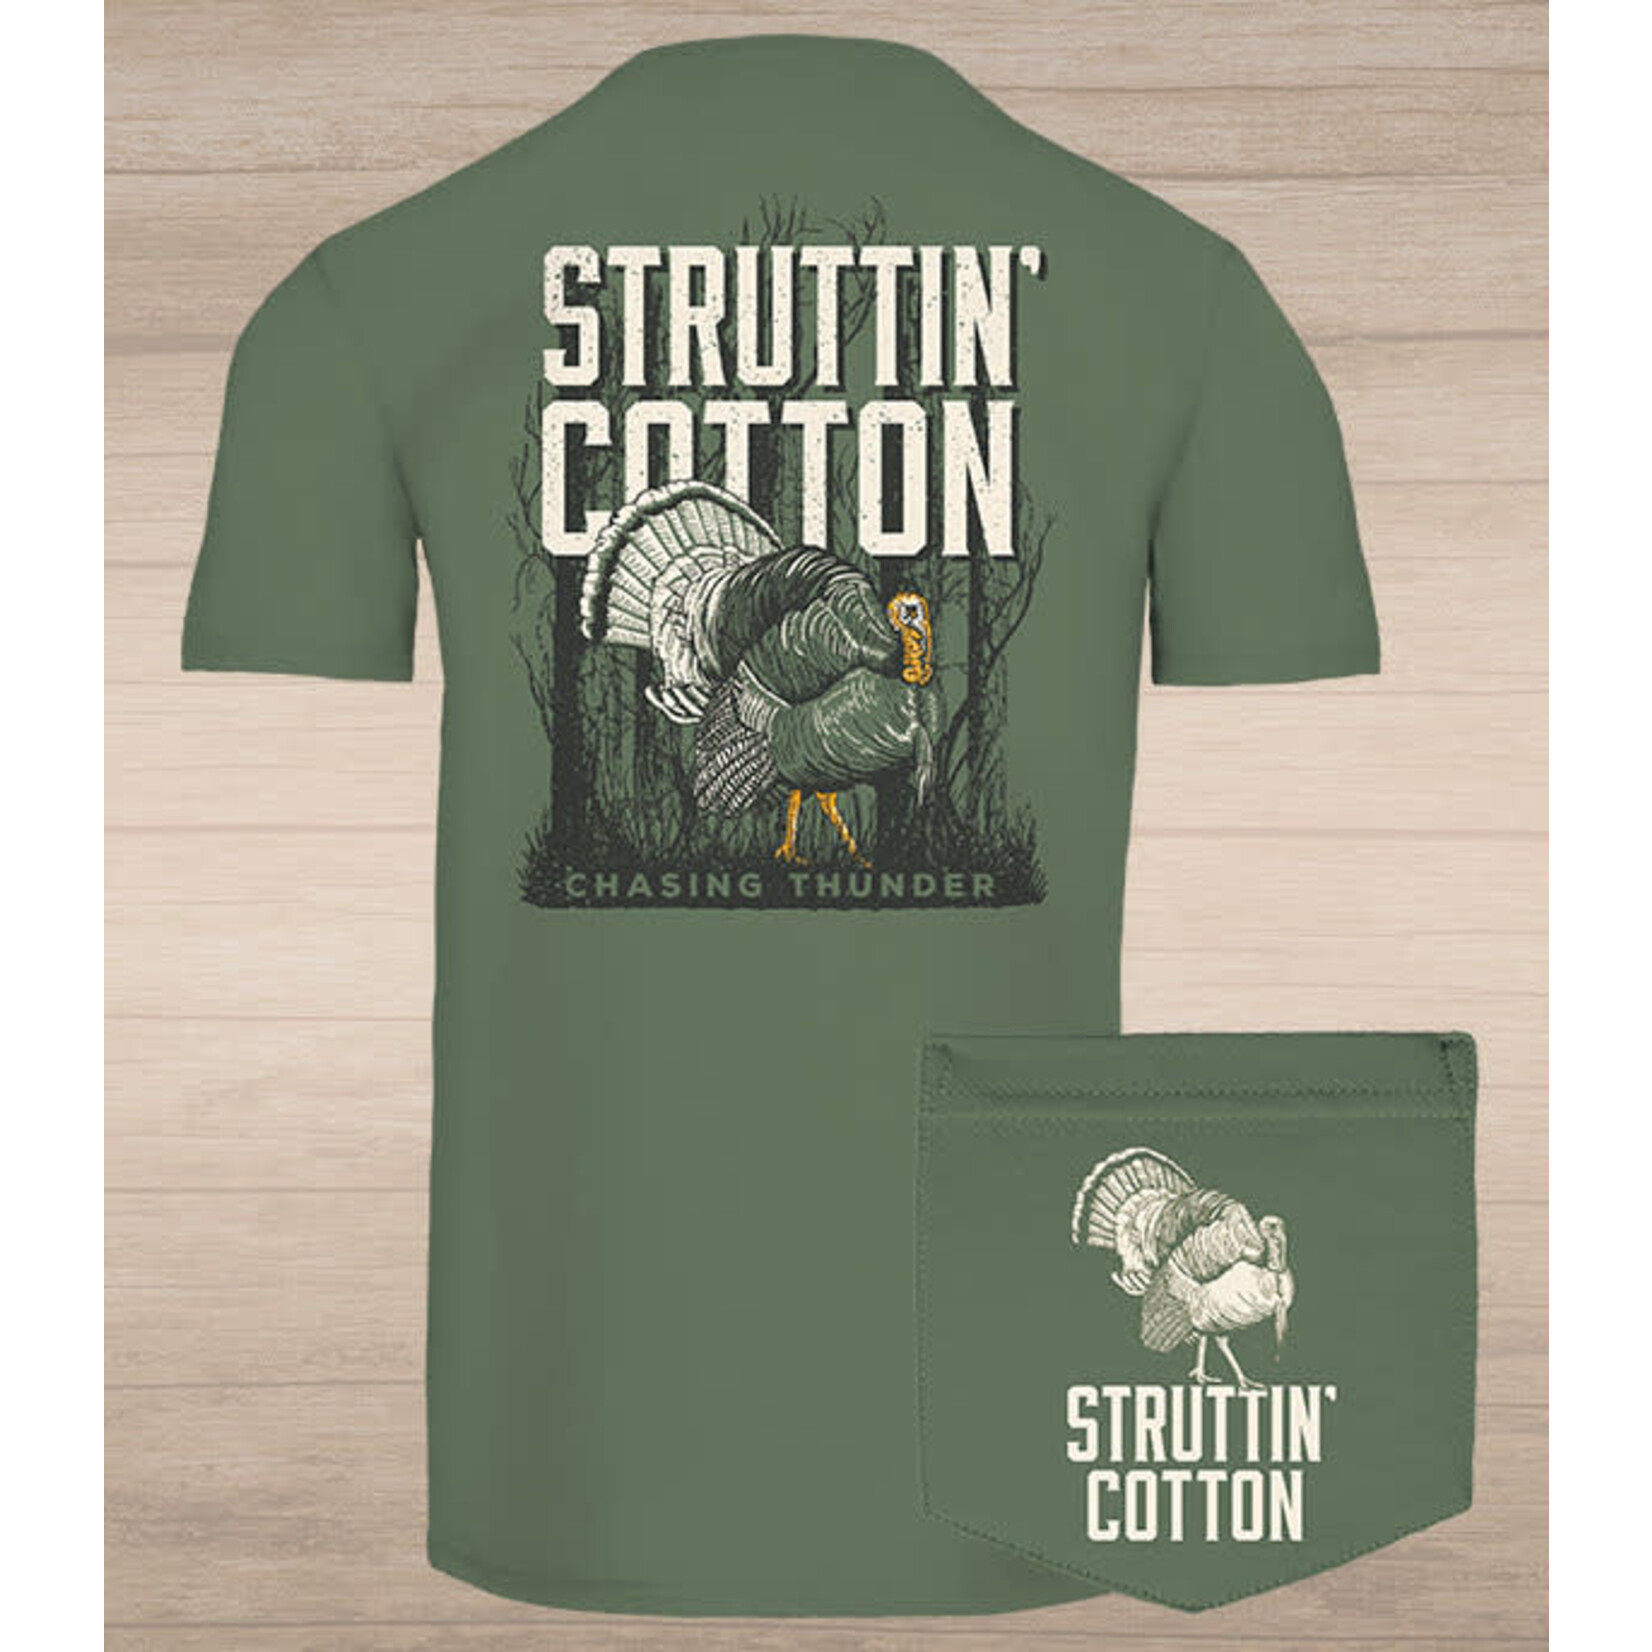 Struttin' Cotton Struttin Cotton Chasing Thunder S/S TEE Shirt